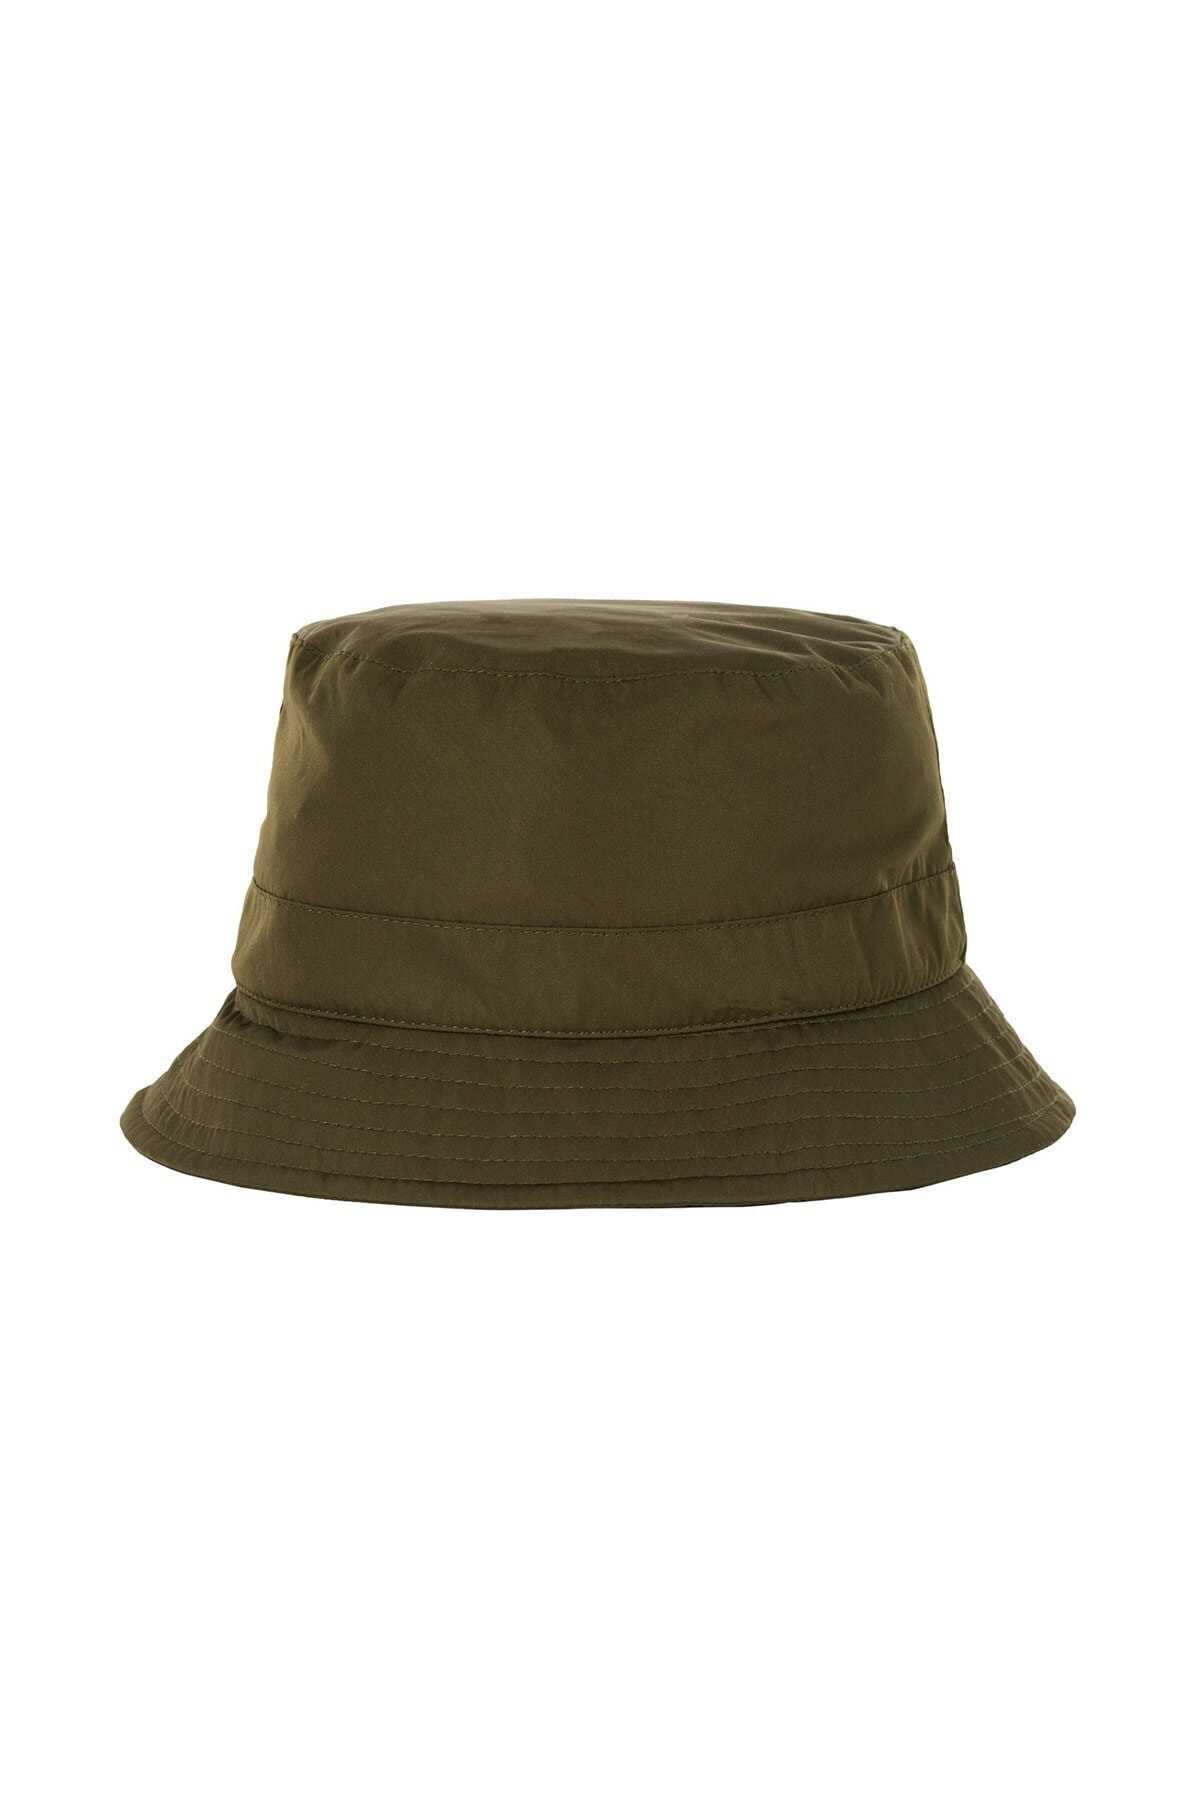 کلاه  برند Barbour رنگ سبز کد ty97102752